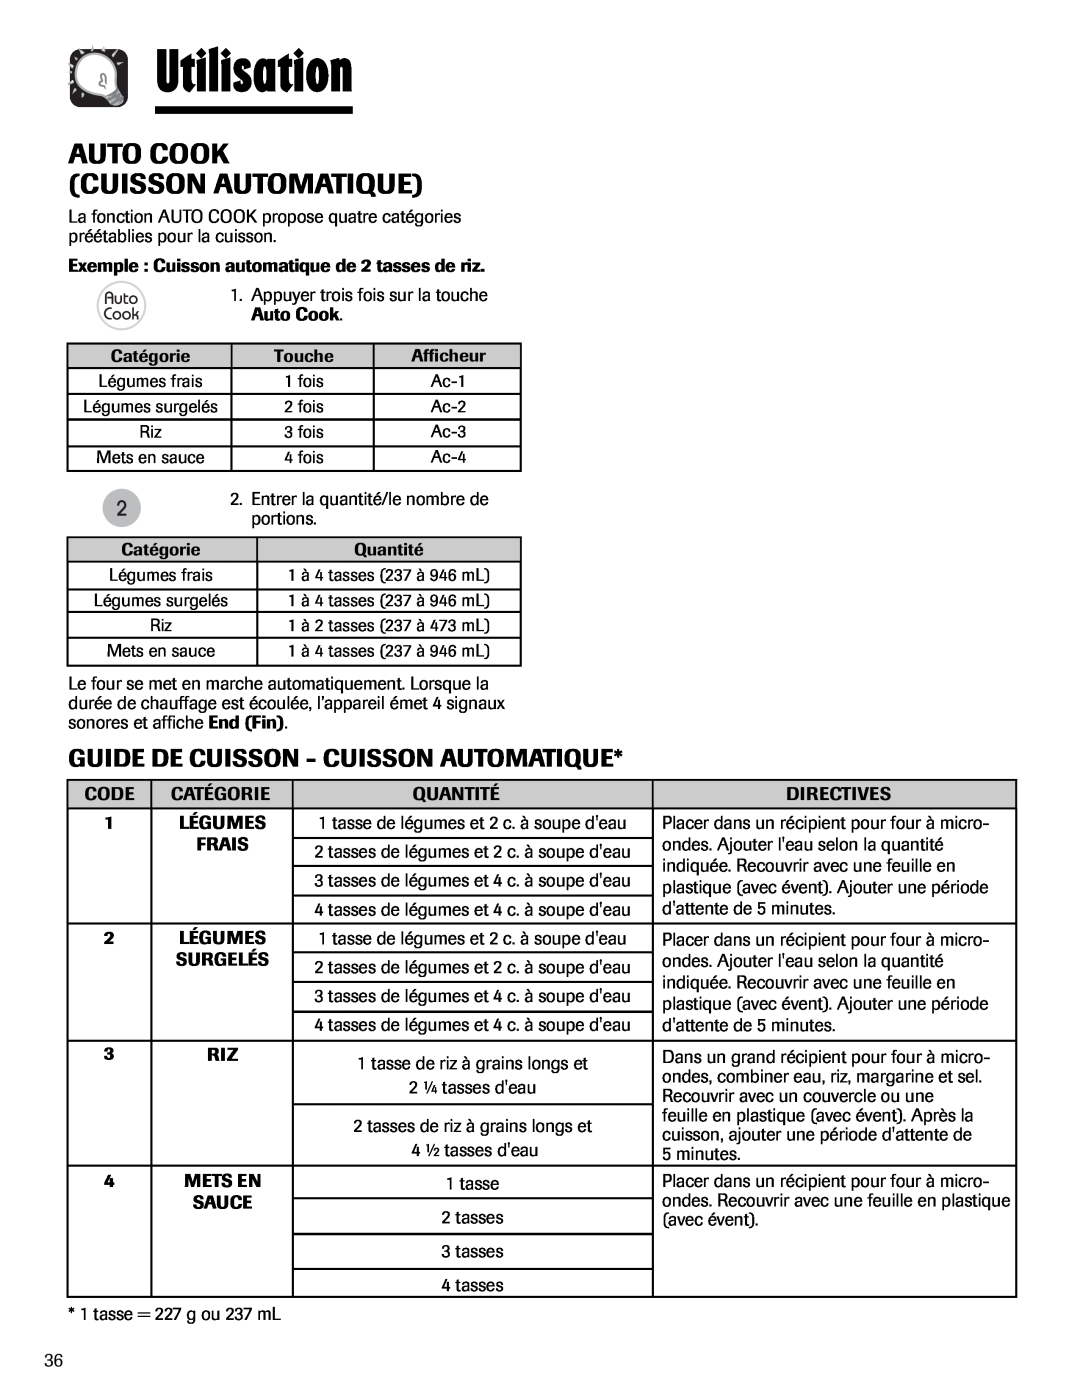 Maytag UMV1152BA Auto Cook Cuisson Automatique, Utilisation, Guide De Cuisson - Cuisson Automatique 